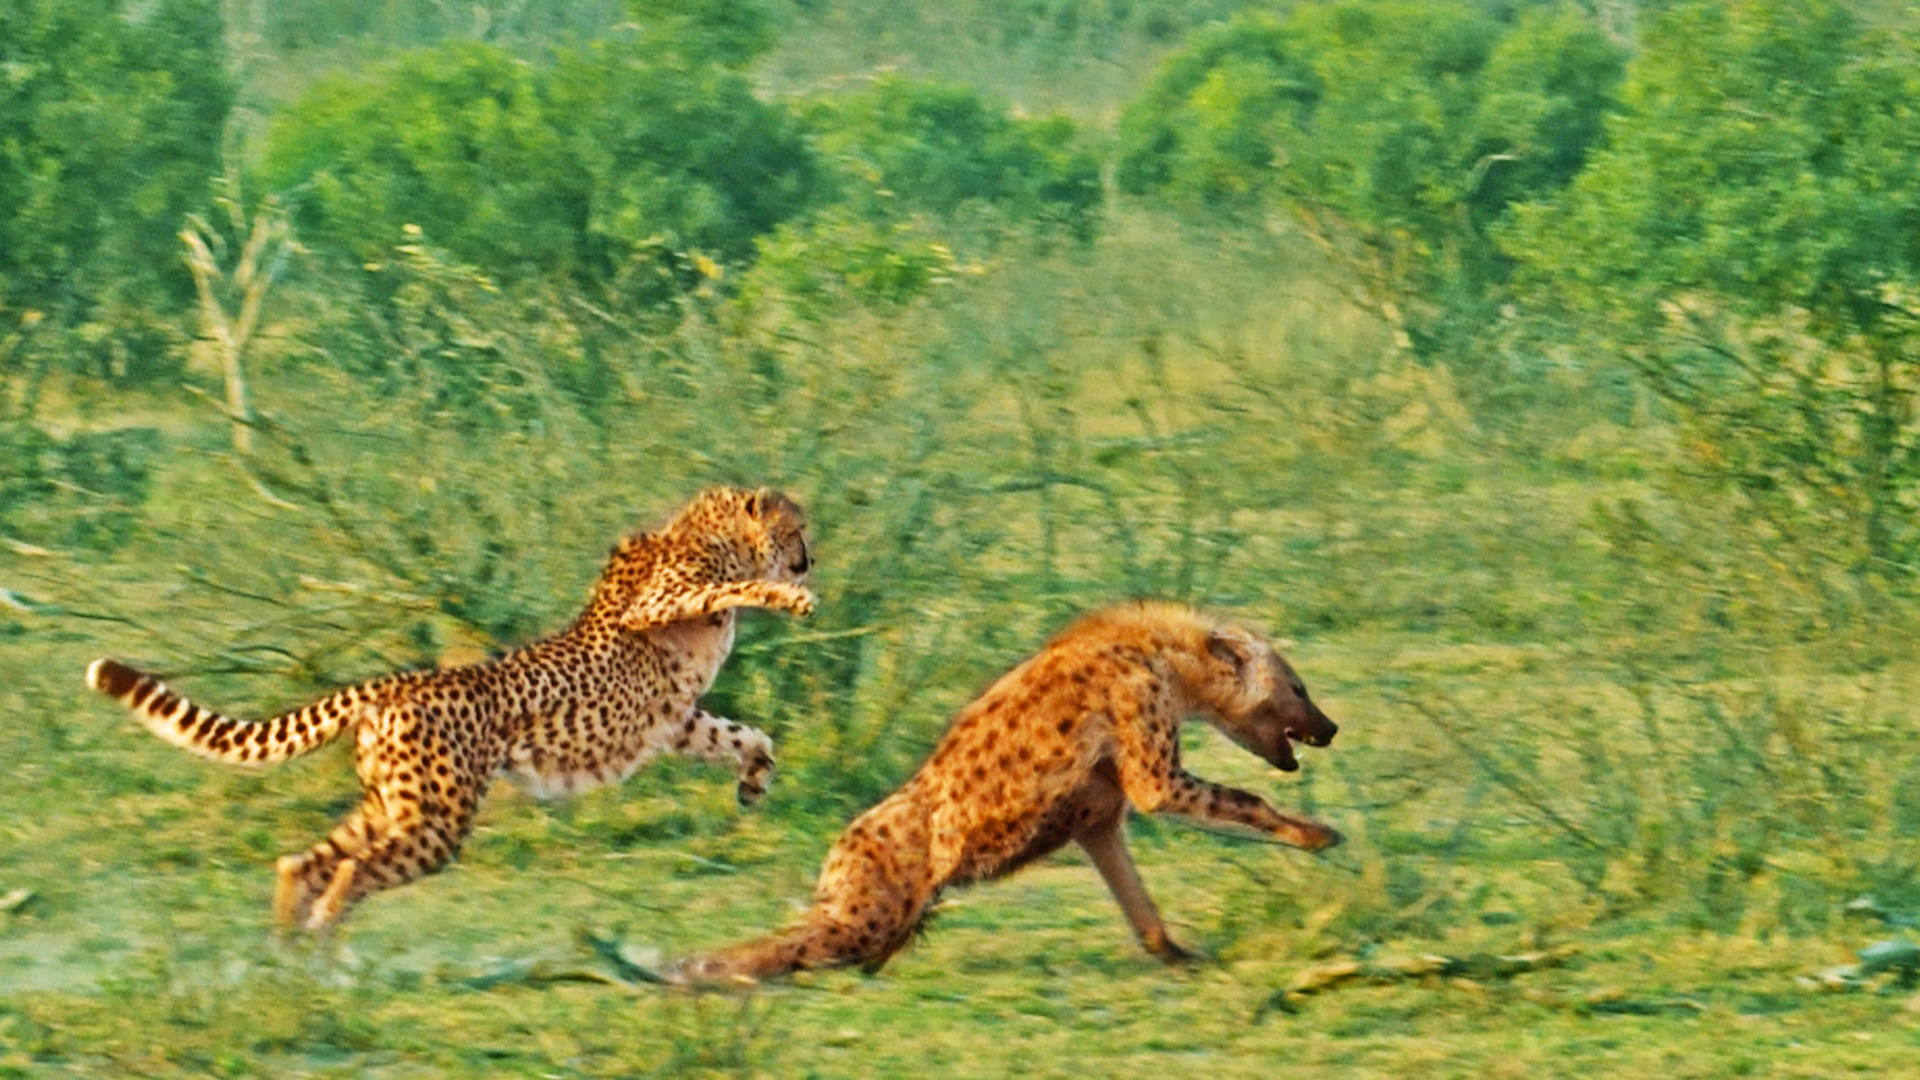 Hyena Runs For its Life From Cheetah